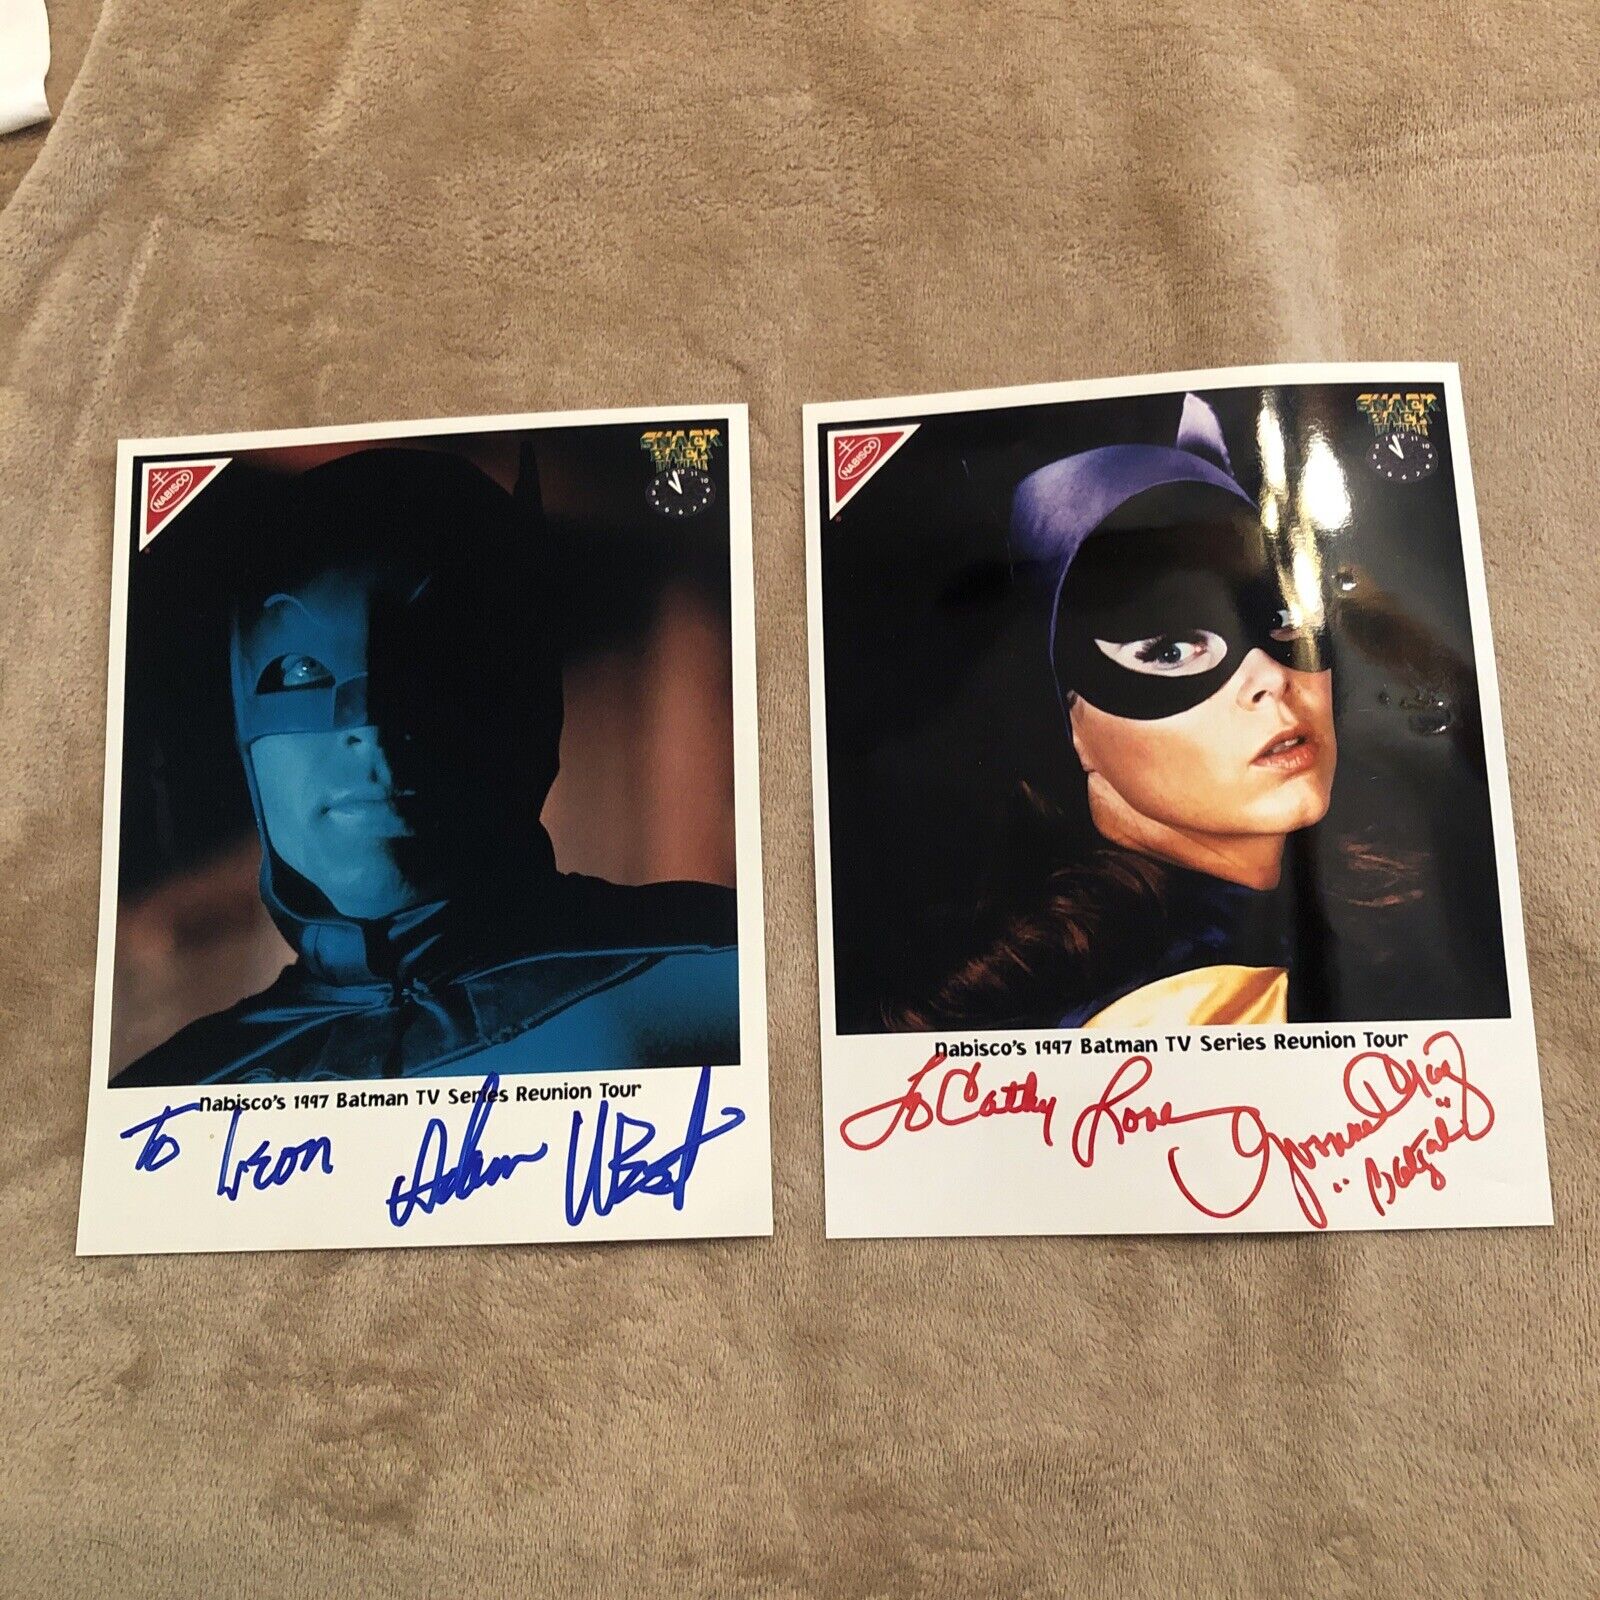 Adam West Yvonne Craig Batman Batgirl Nabisco 1997 TV reunion signed portraits